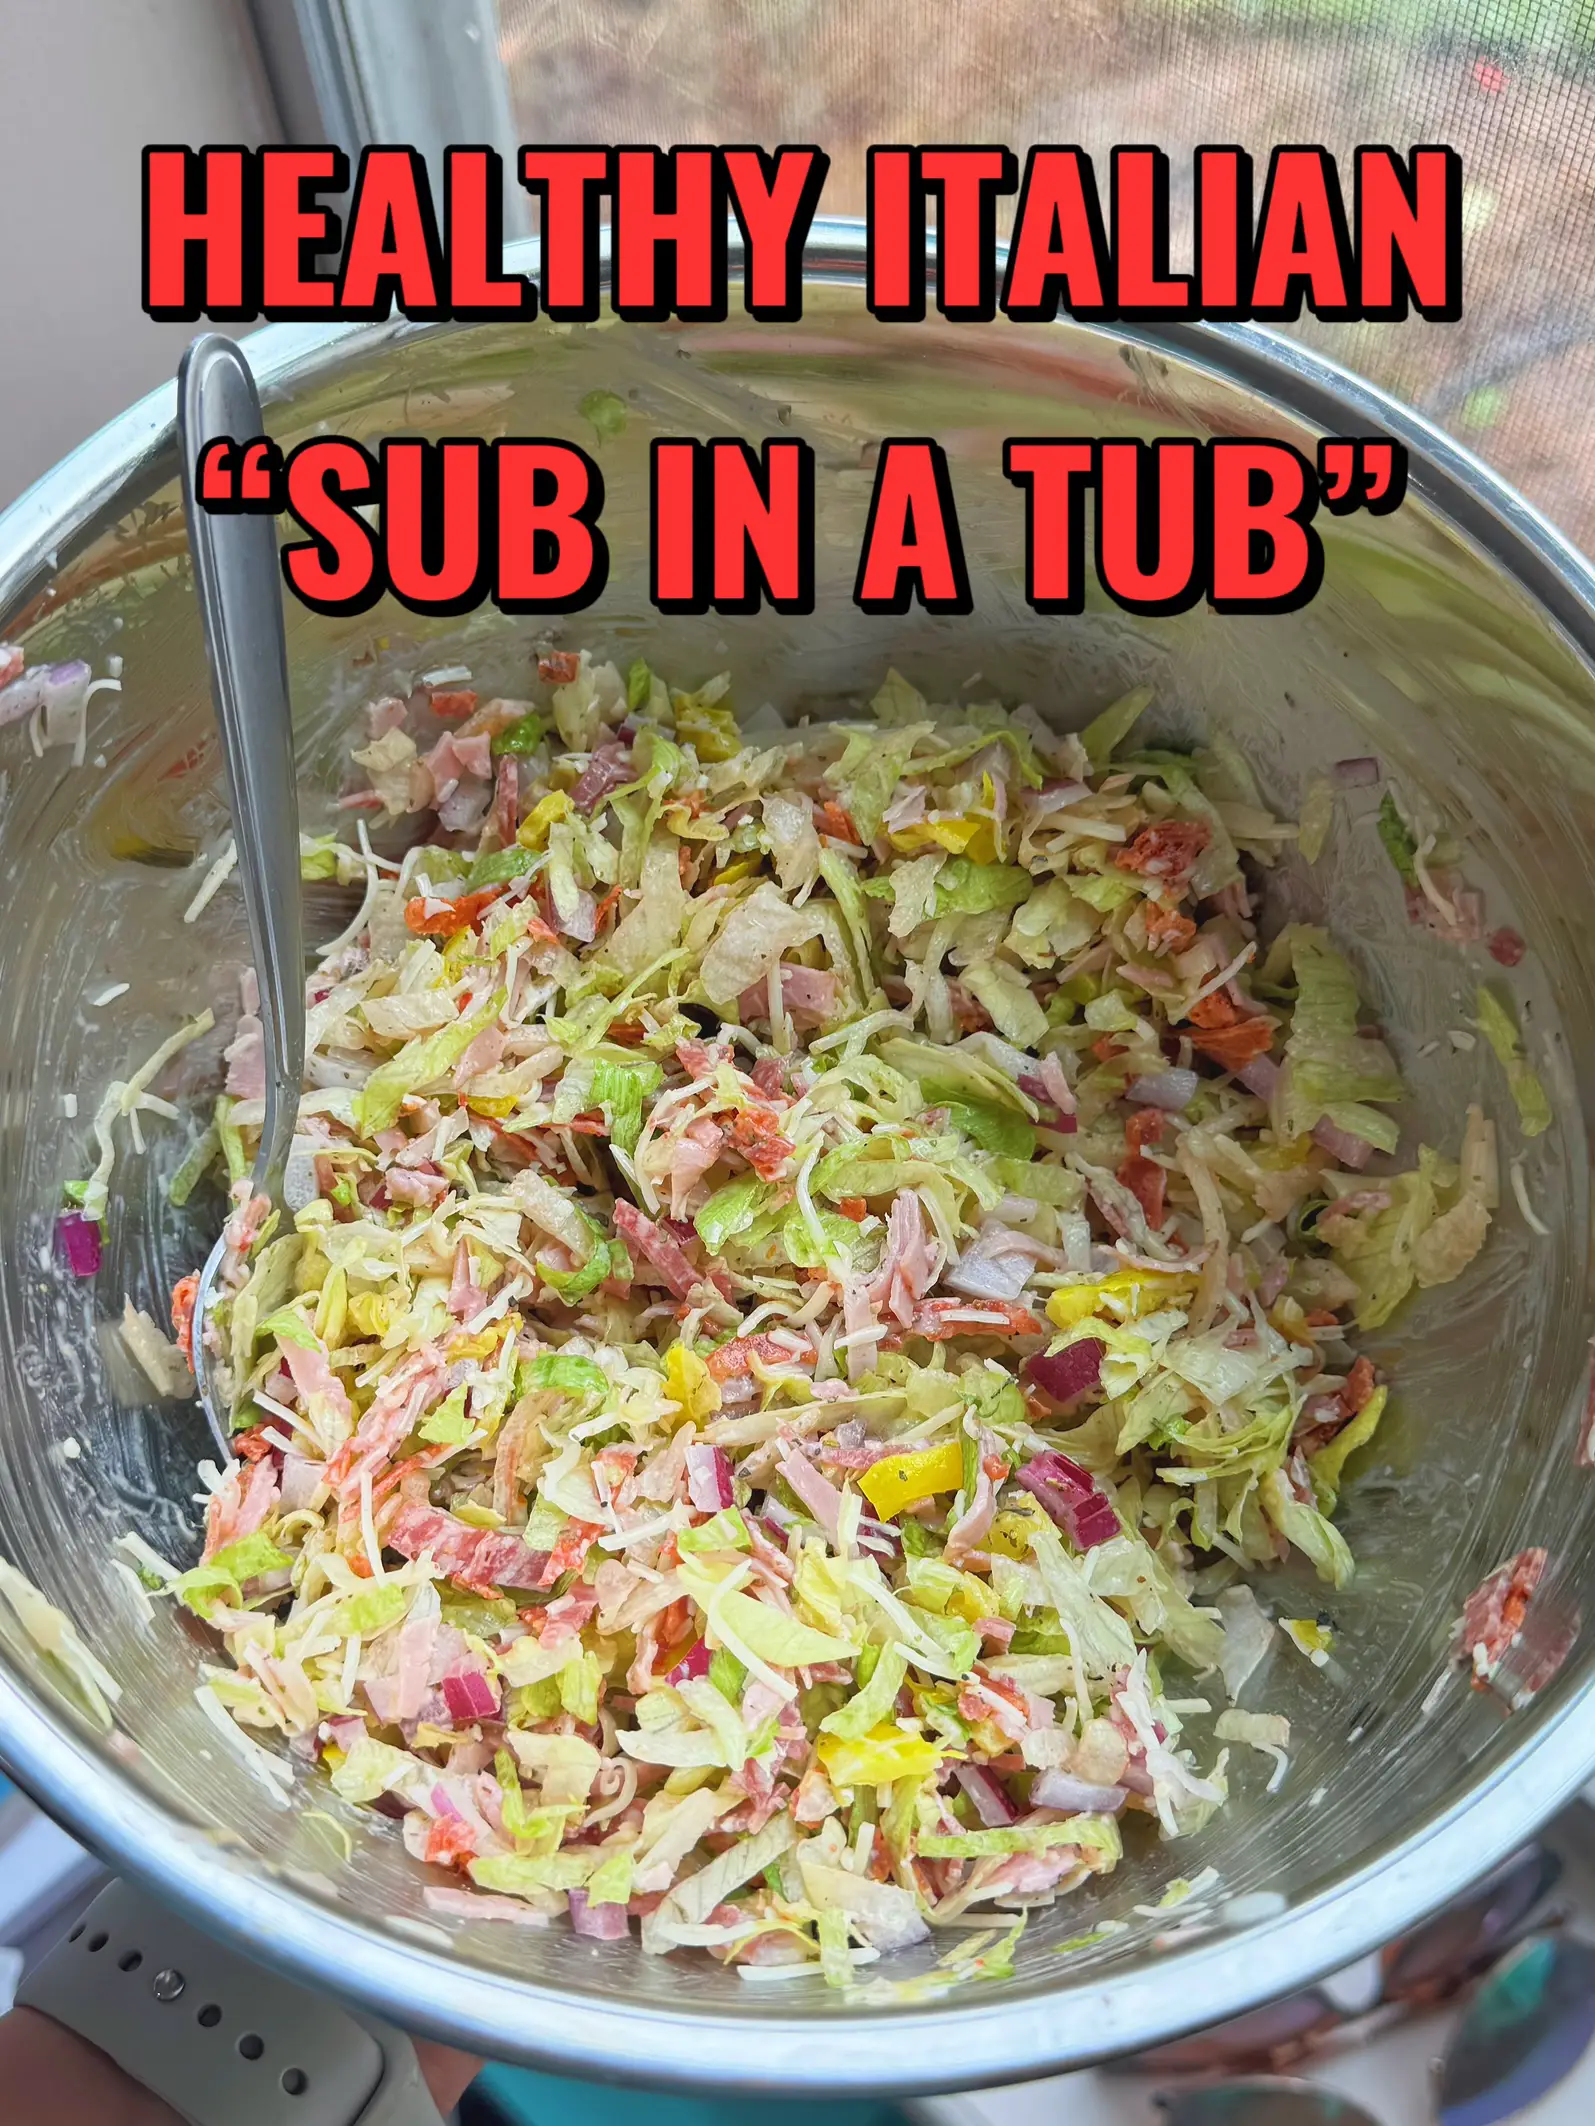 sub in a tub chopper - Lemon8 Search